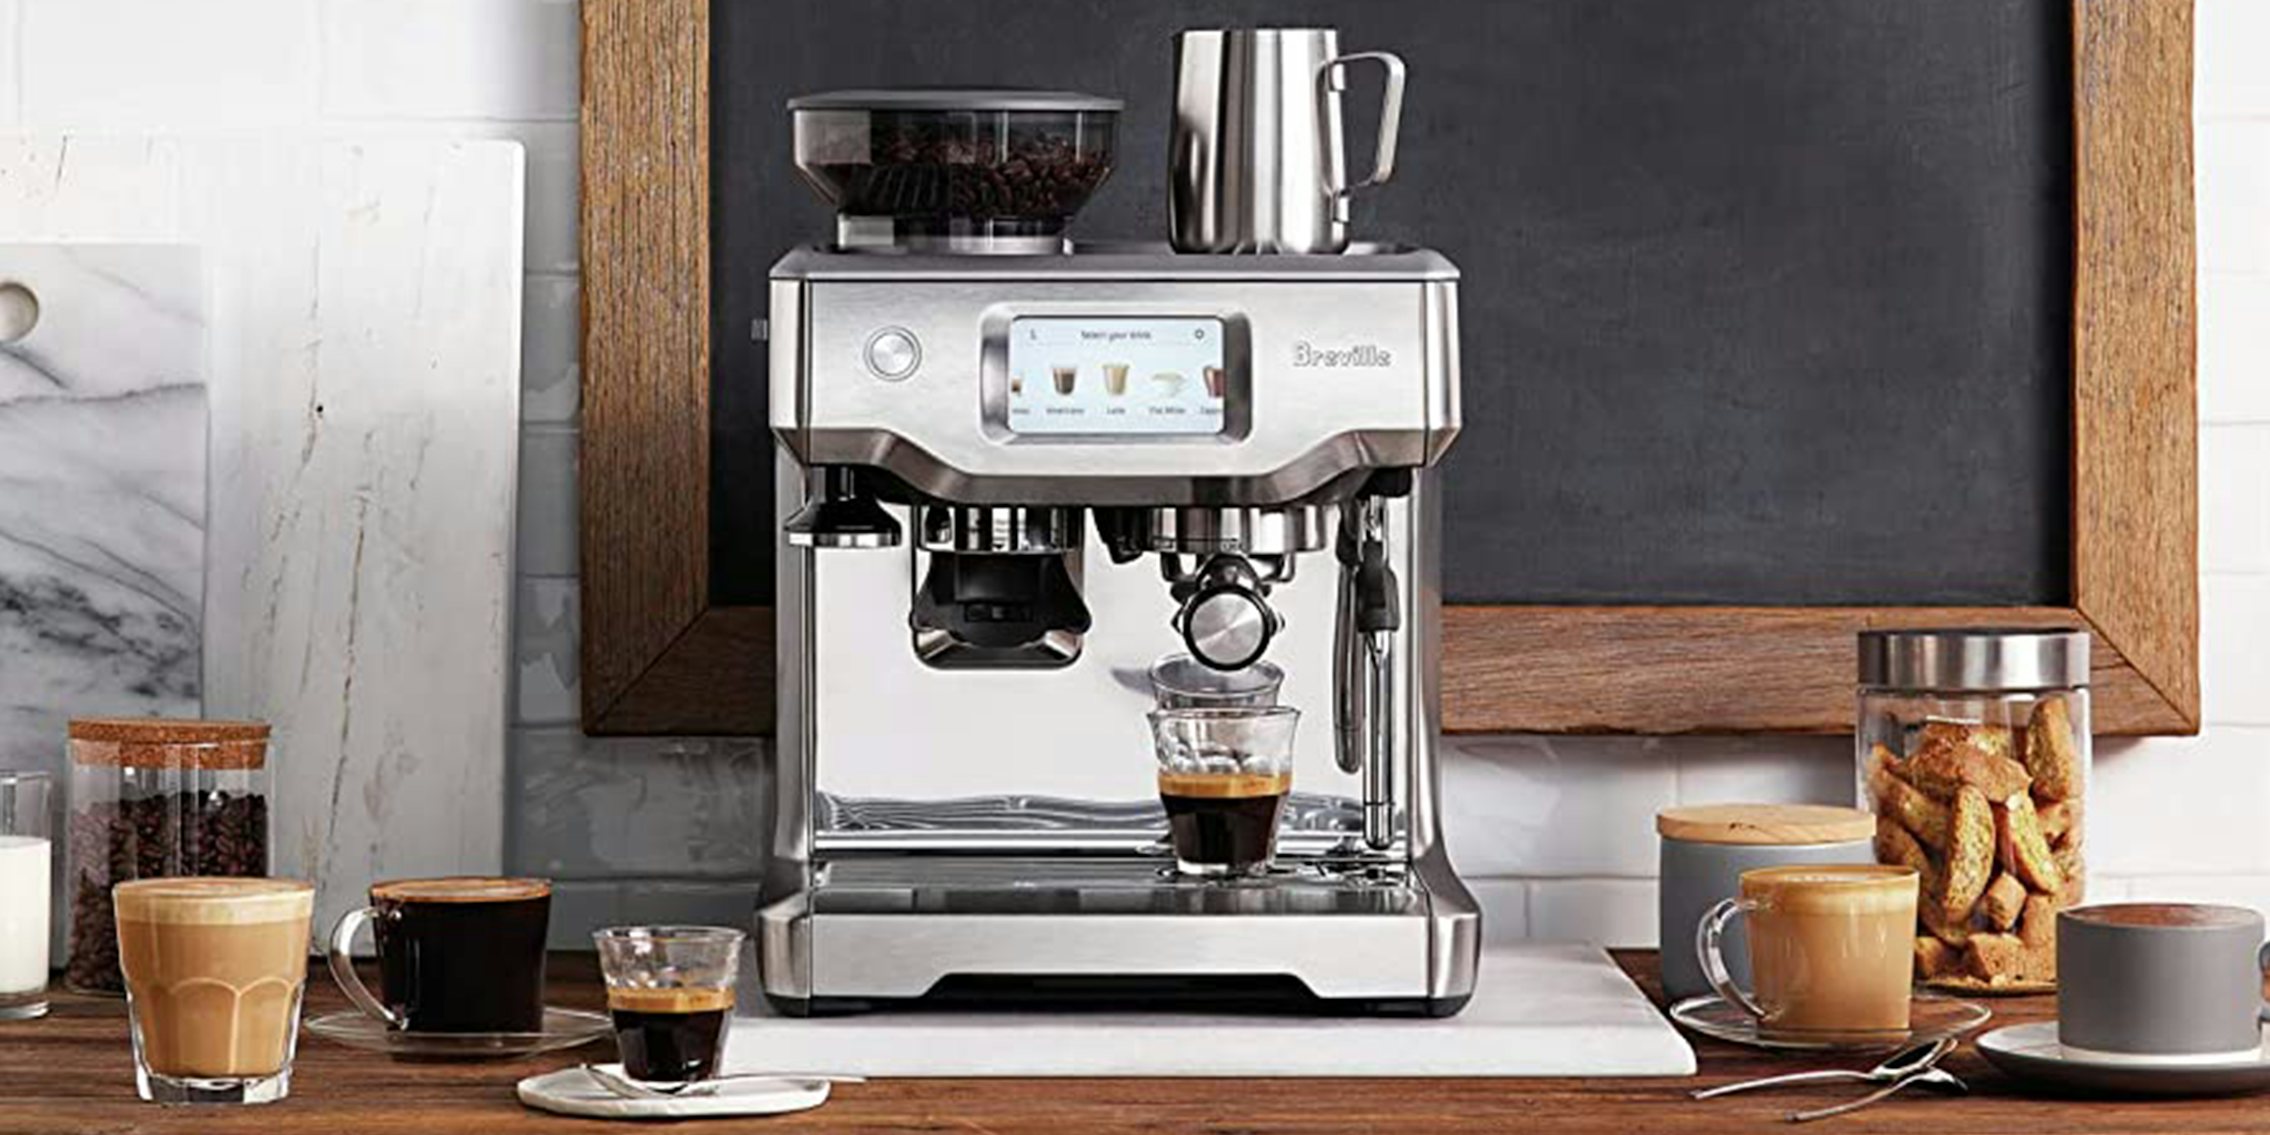 Breville Barista Express Espresso Machine Setup & Review - Coffee at Three